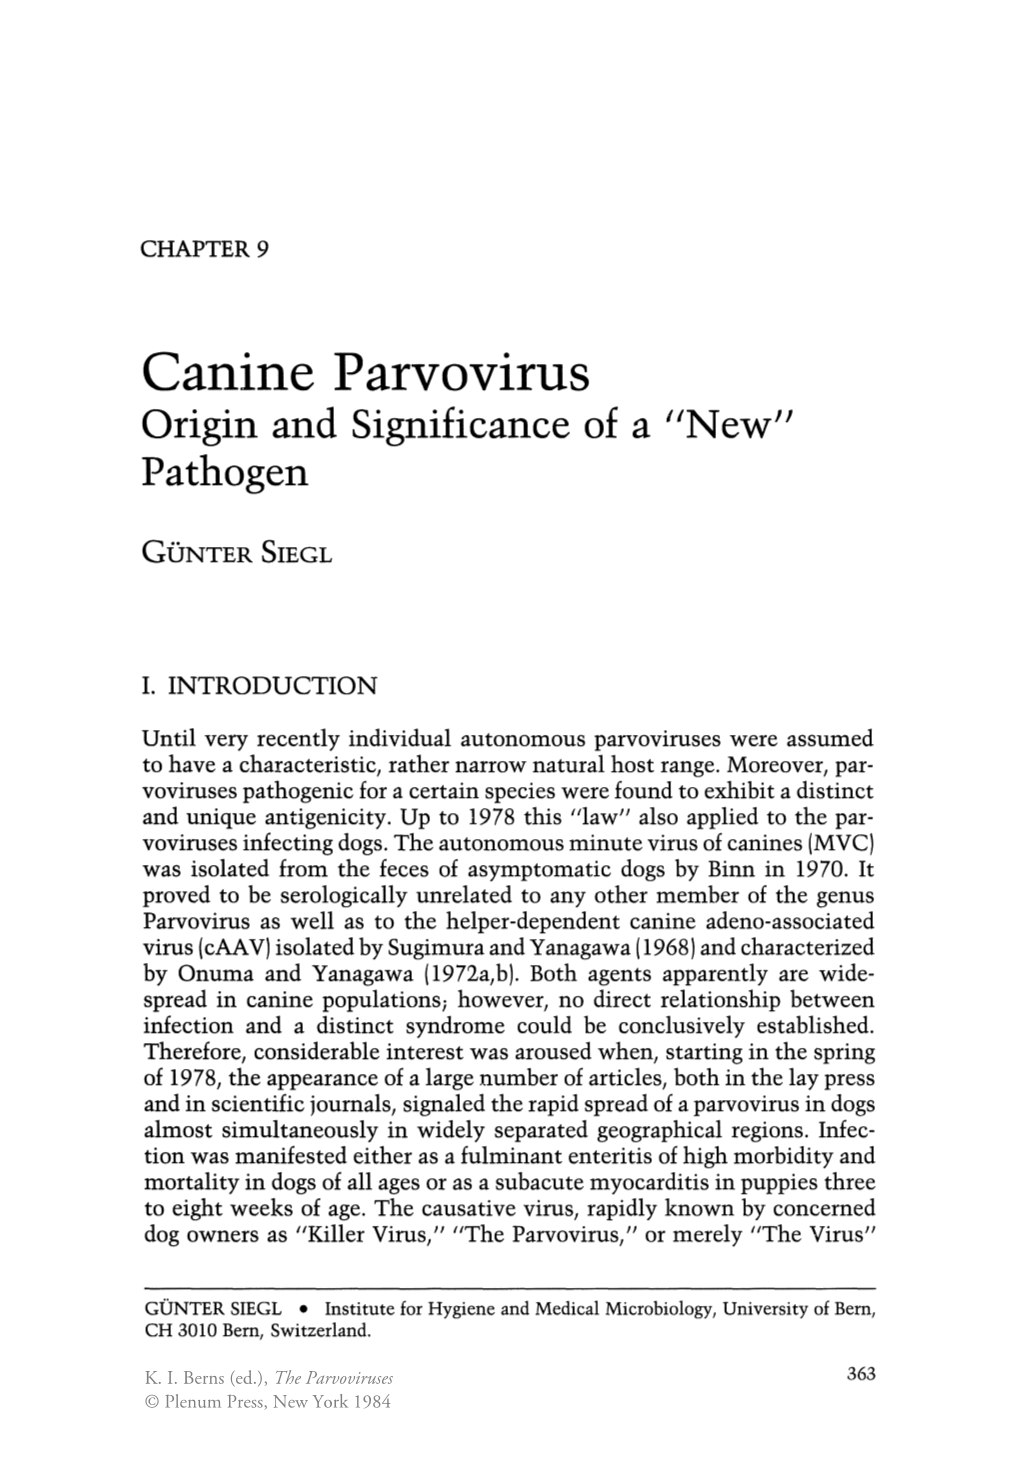 Canine Parvovirus Origin and Significance of a "New" Pathogen